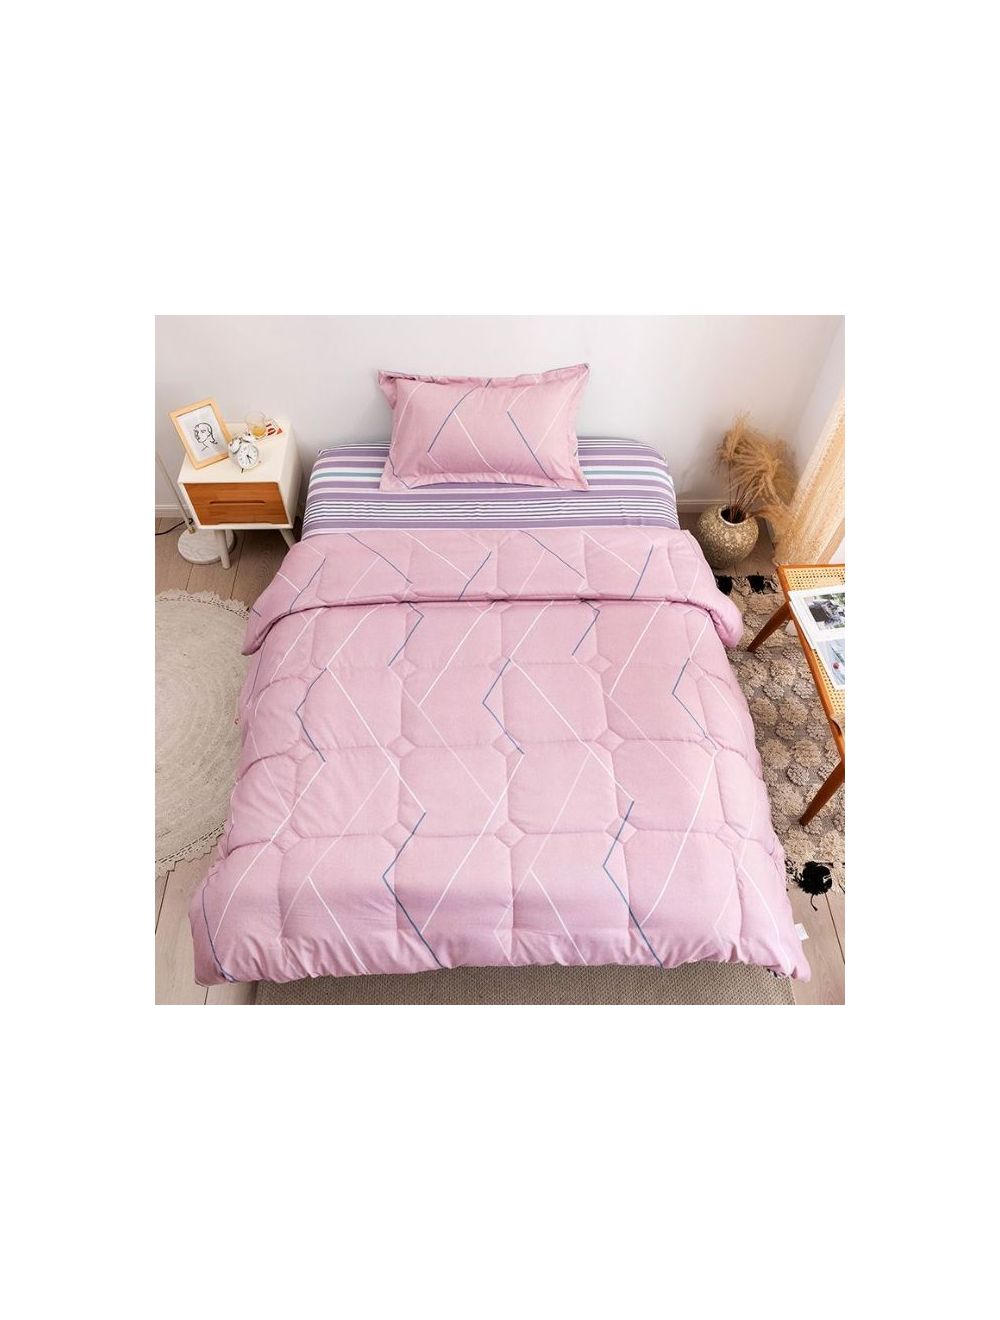 Rishahome 3 Piece Single Size Comforter Set Microfiber Pink 150x200cm-PFLCS0003